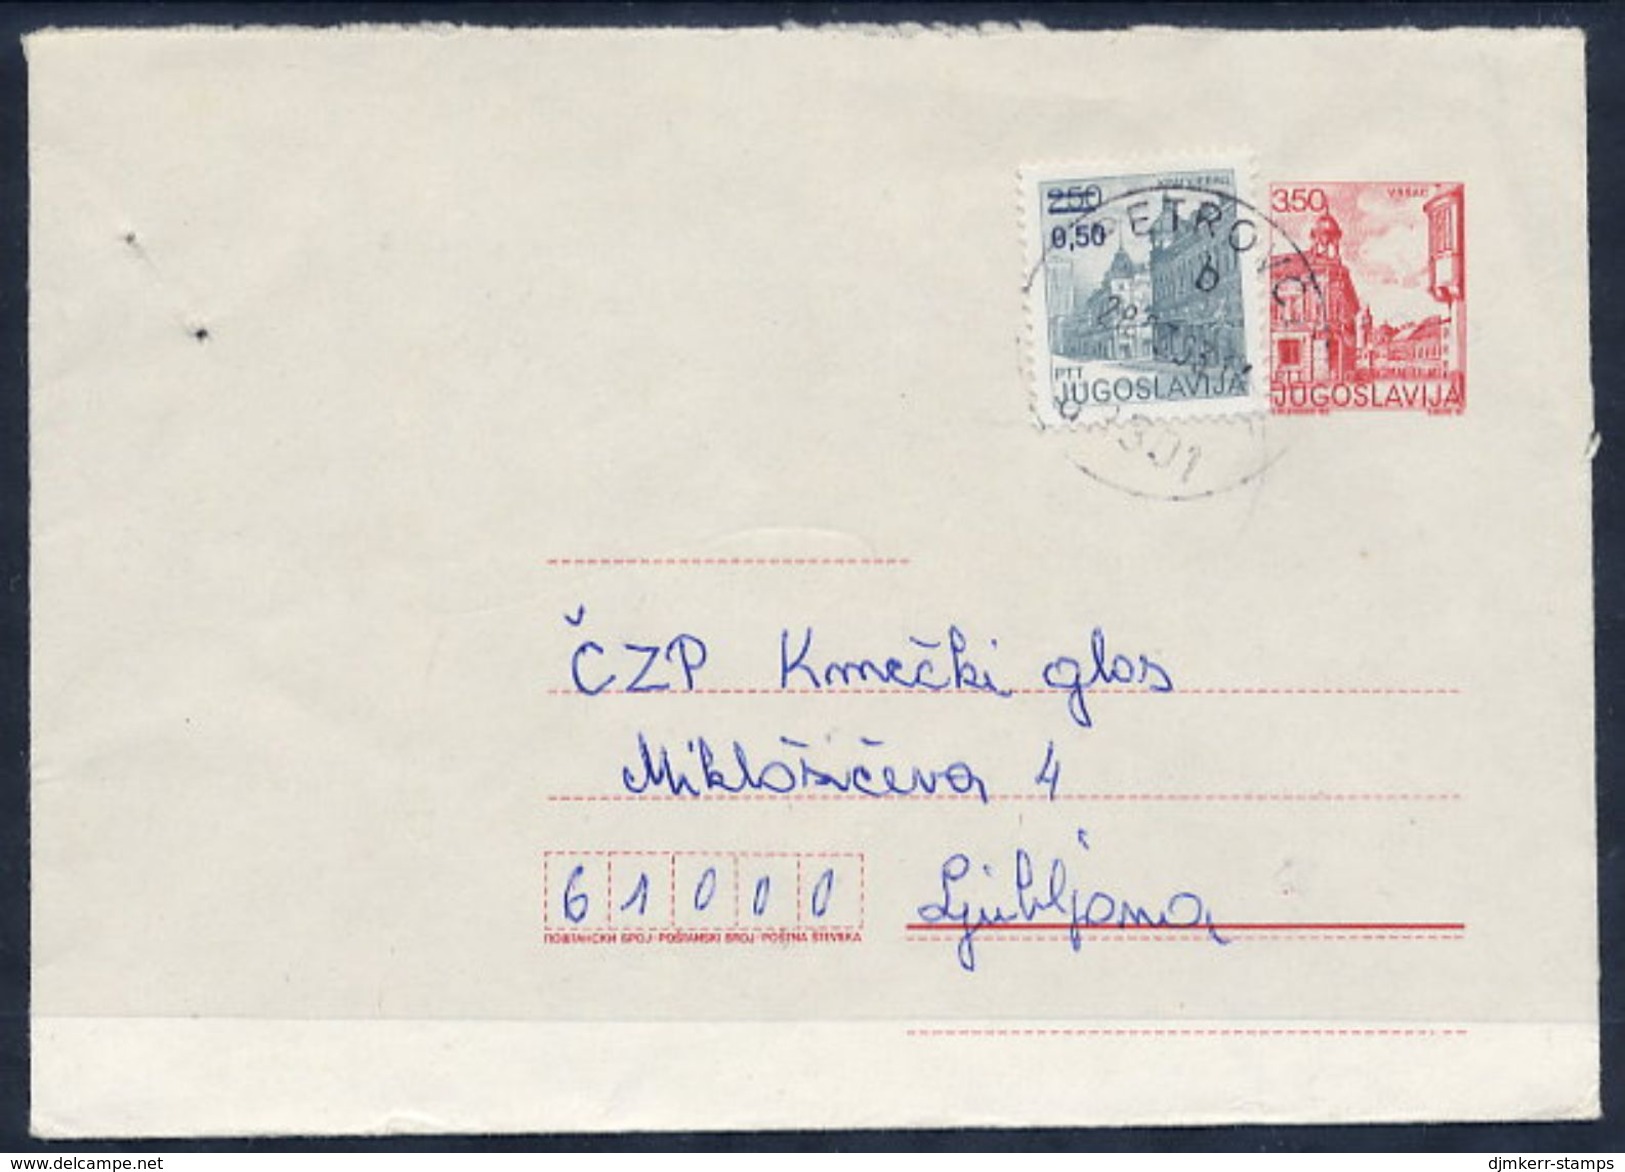 YUGOSLAVIA 1981 Tourism 3.50 D.stationery Envelope Used With Additional Franking.  Michel U63 - Ganzsachen